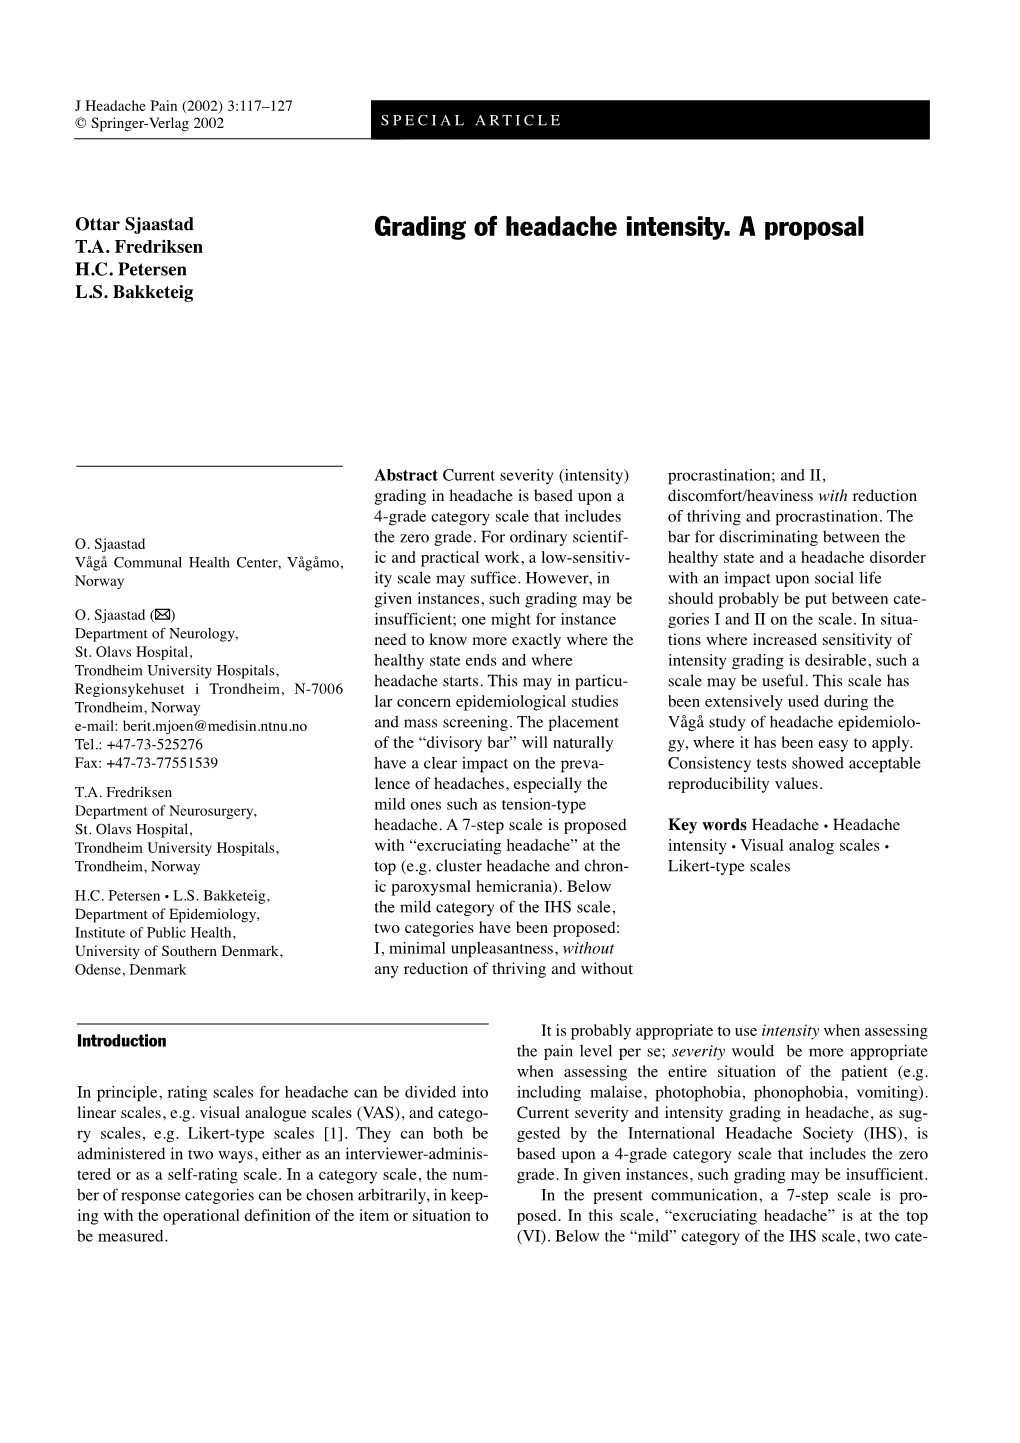 Grading of Headache Intensity. a Proposal T.A